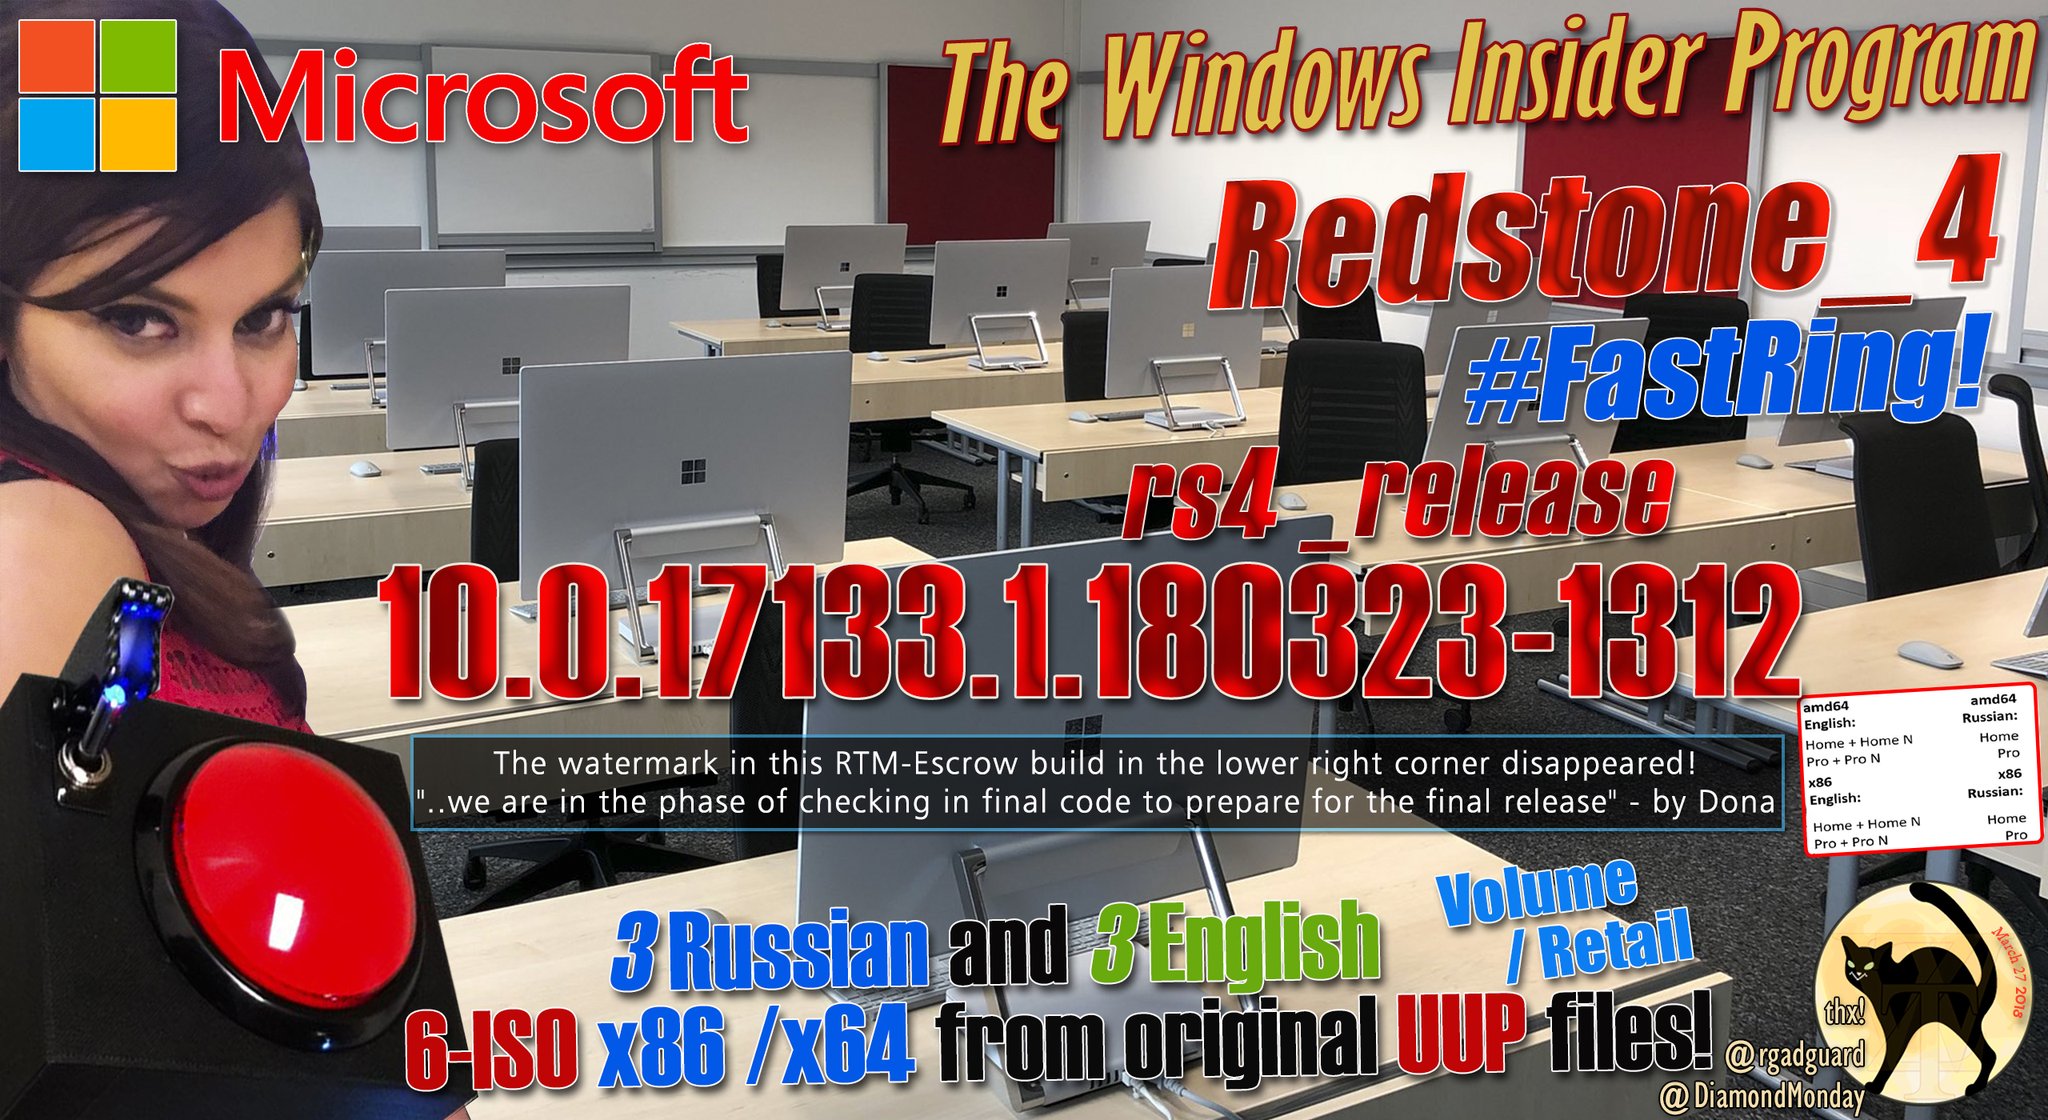 DZUV3CKXUAEnrZz-윈도10 버전1803 RS4 레드스톤4 17133.1 빌드가 RTM 이 아니라고 하시는 Wzor - RTM Escrow 라고 표기함.jpg